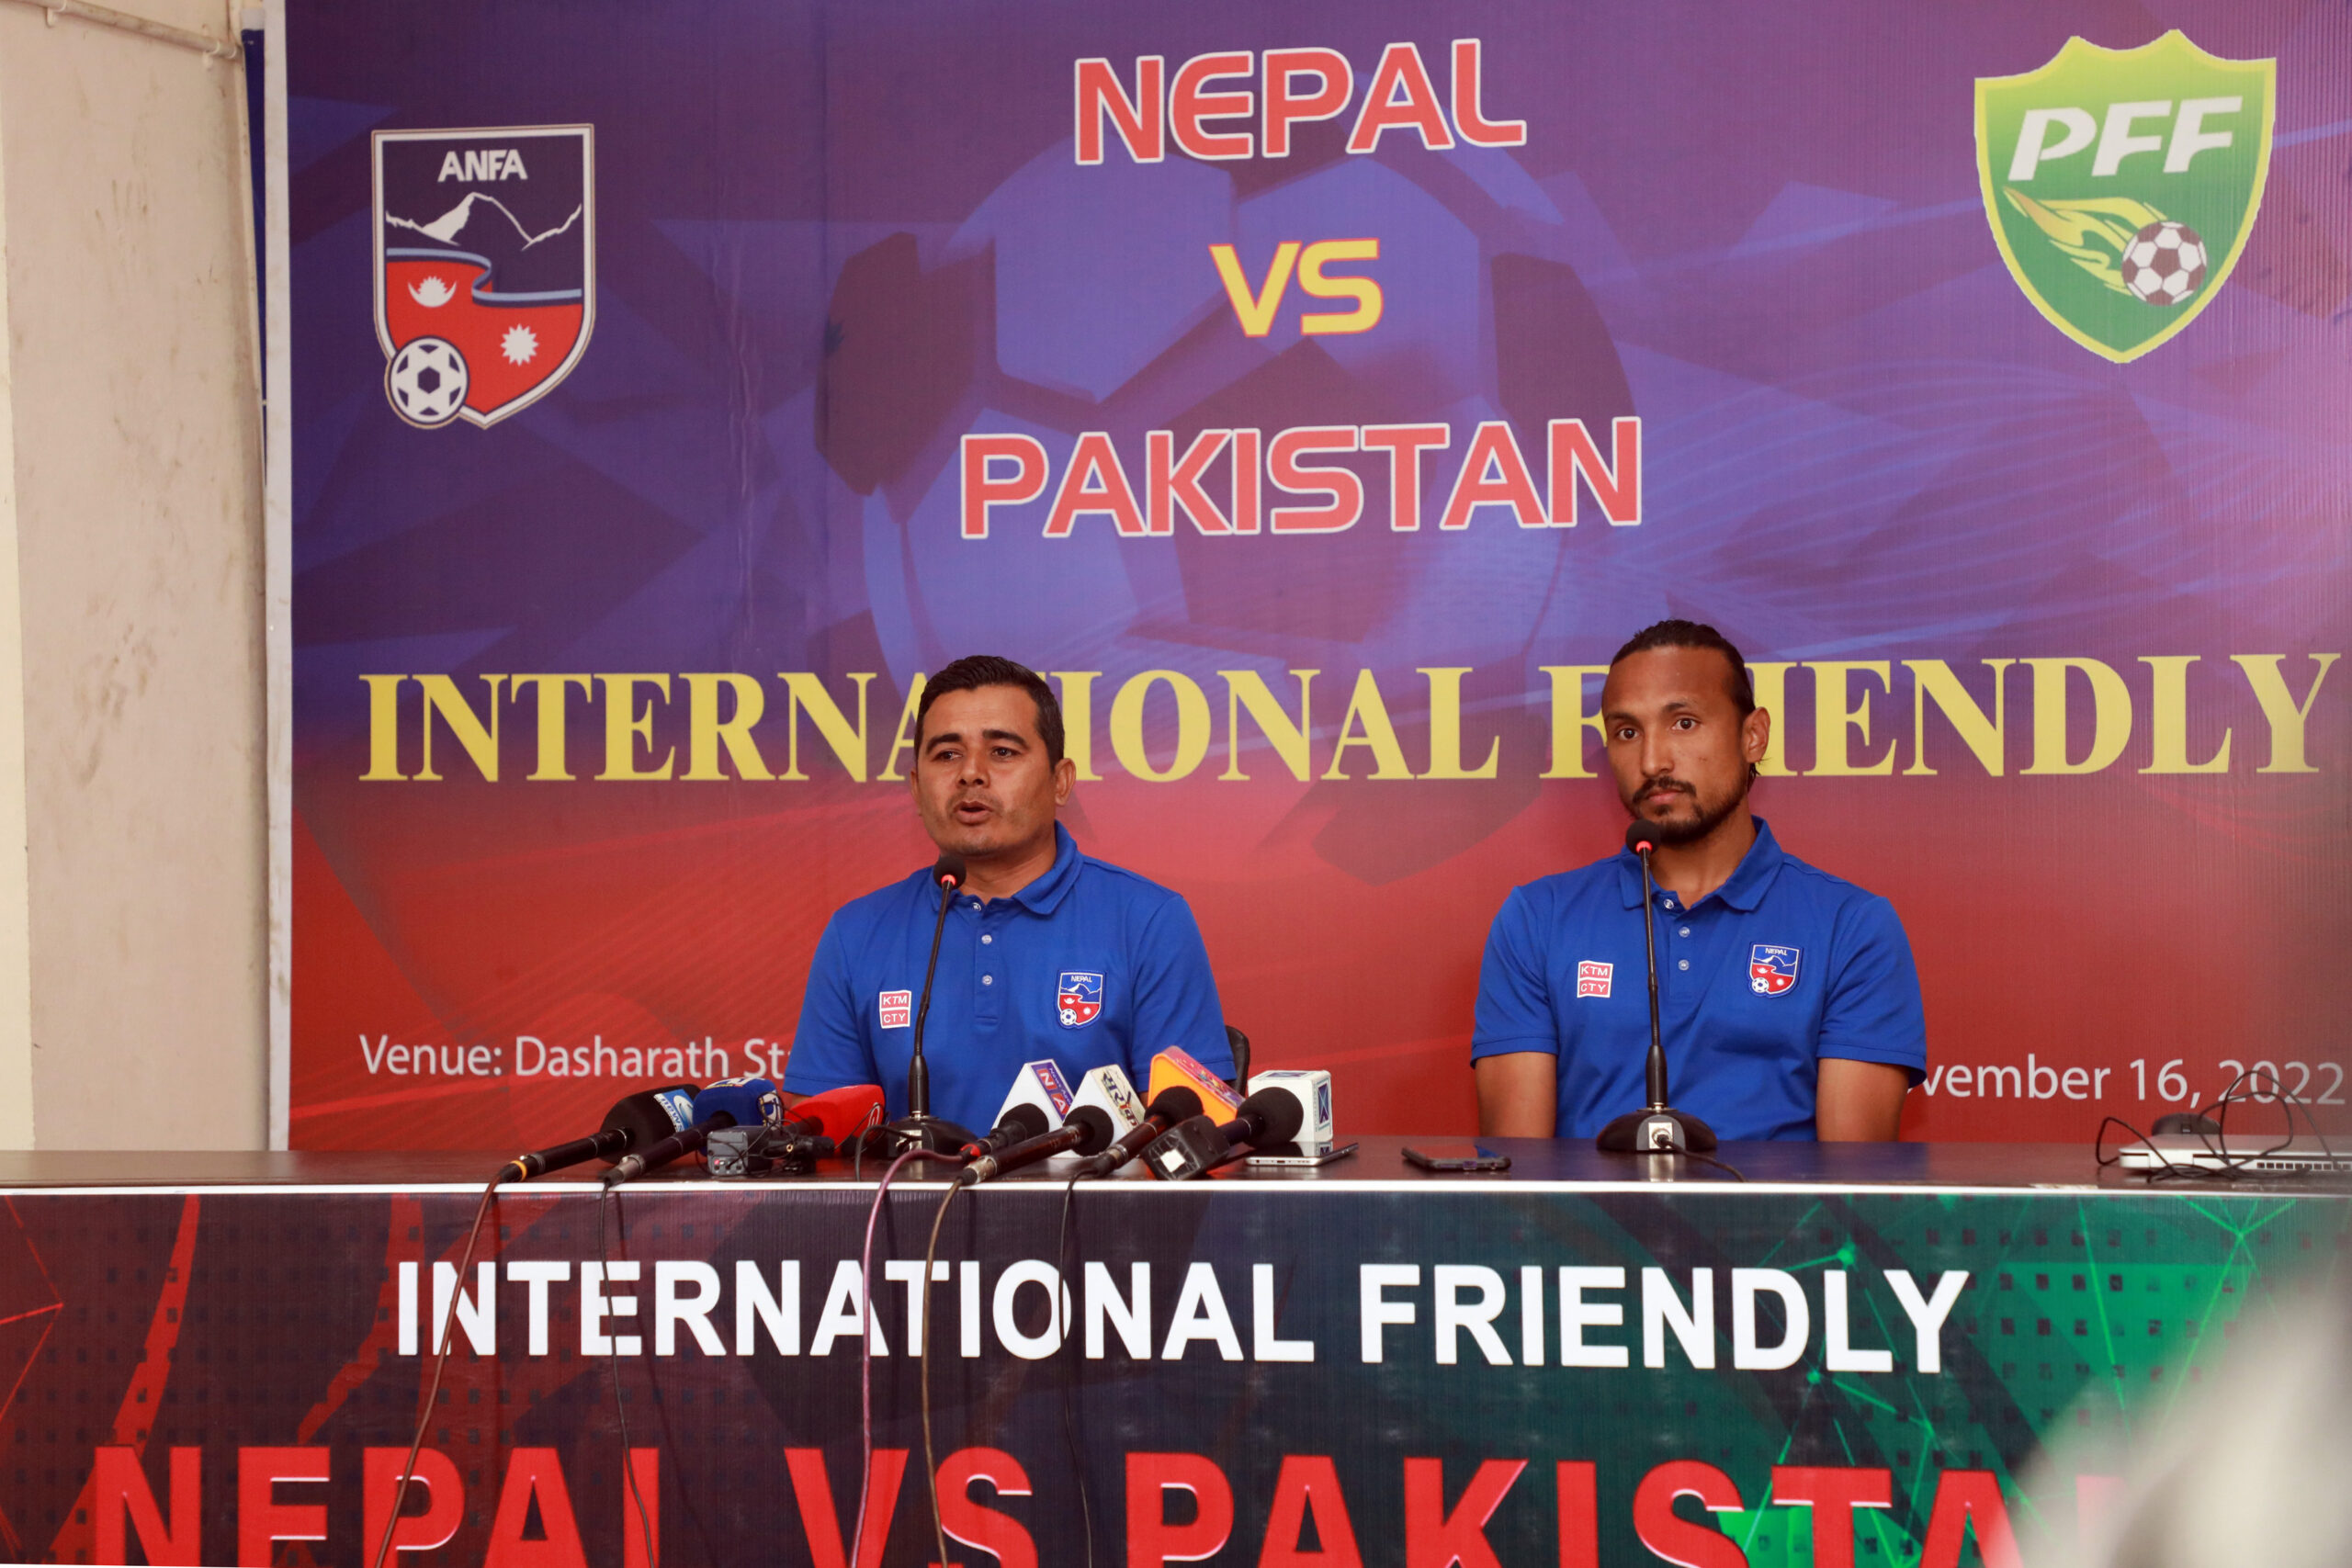 Nepal & Pakistan to play a friendly football match on Wednesday